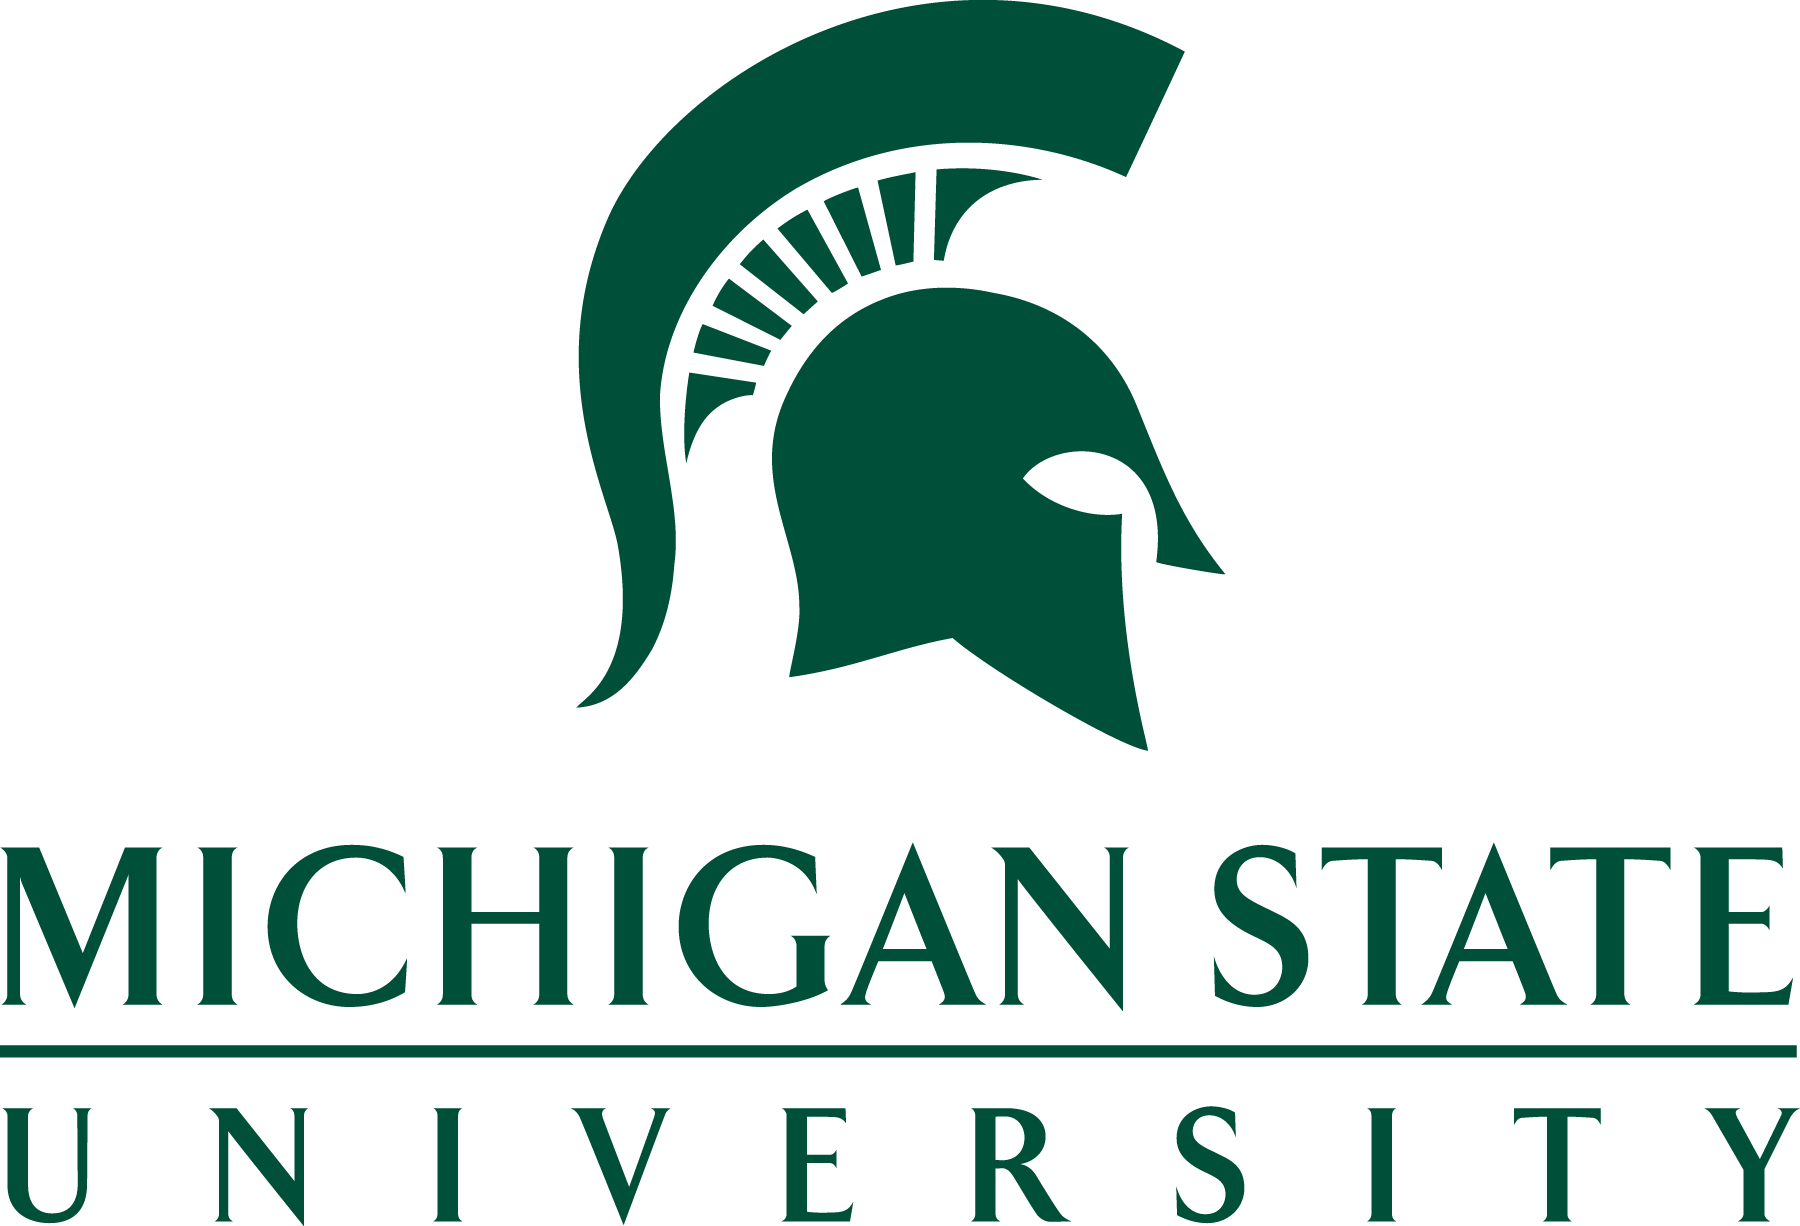 MSU Spartan helmet over the signature wordmark for Michigan State University, connoting collaborationMichigan State University 